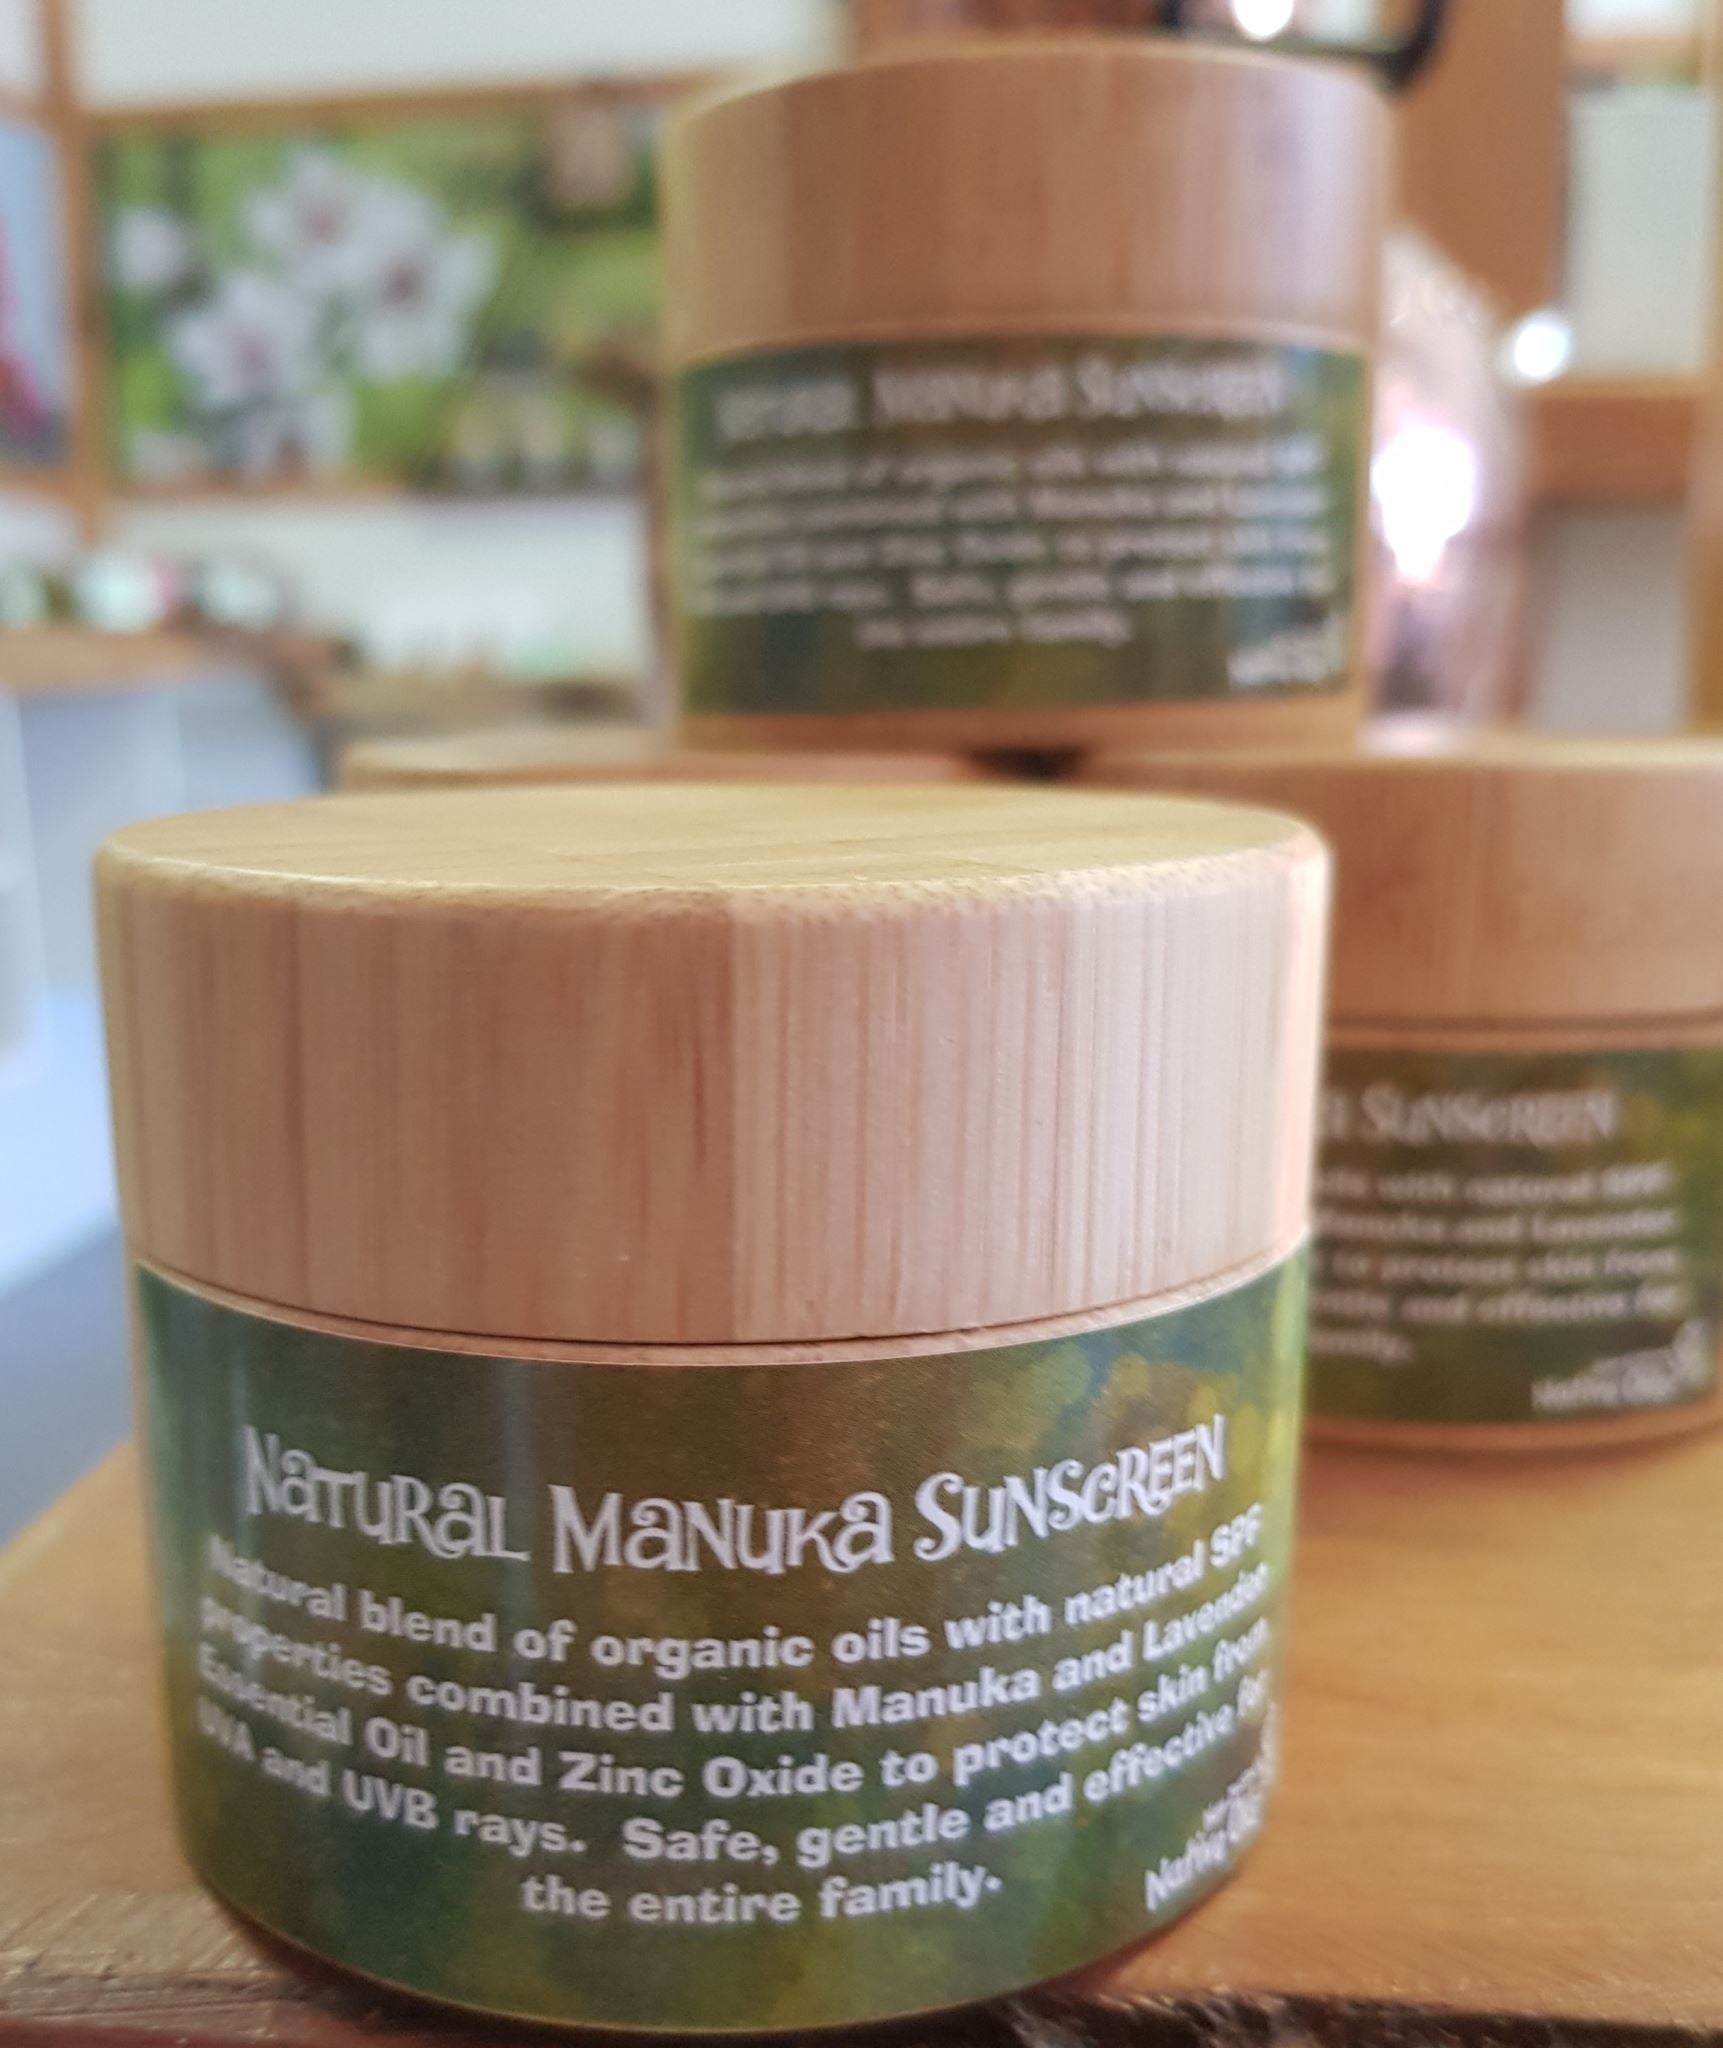 Natural Manuka Sunscreen 100g-NZ Native Oils Ltd